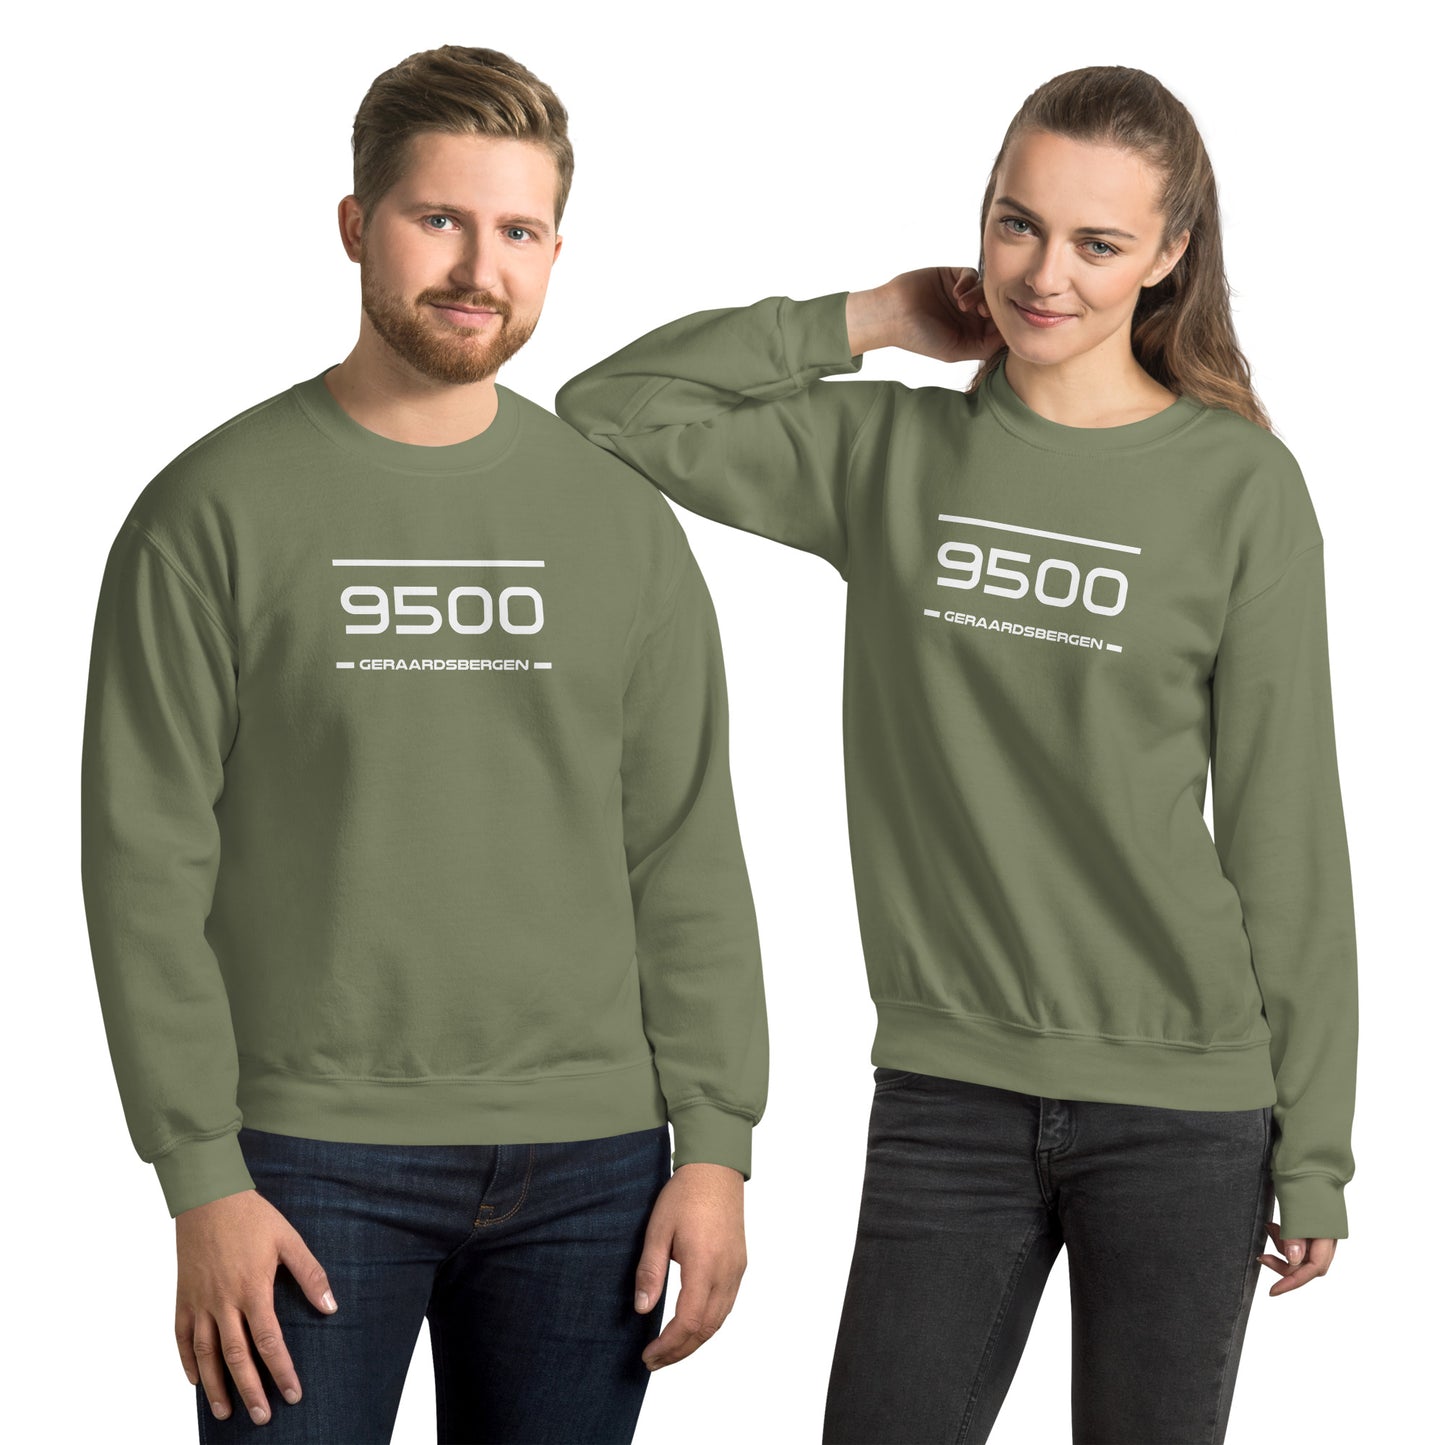 Sweater - 9500 - Geraardsbergen (M/V)